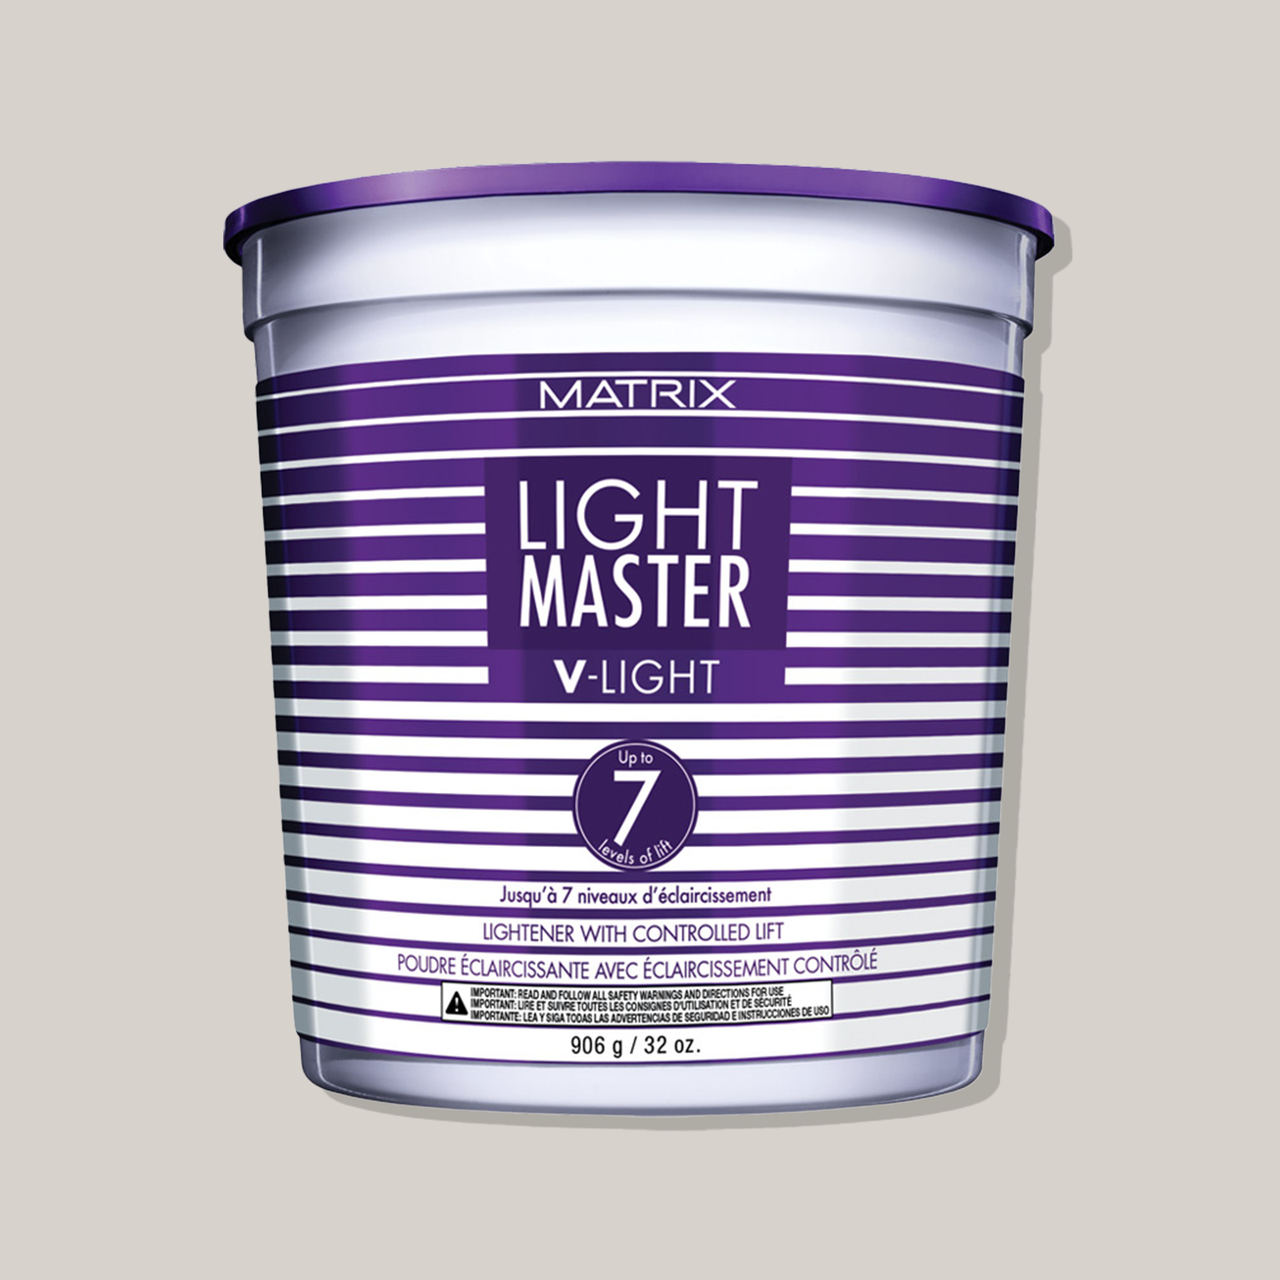 Matrix VLight Lightening Powder 7 levels 